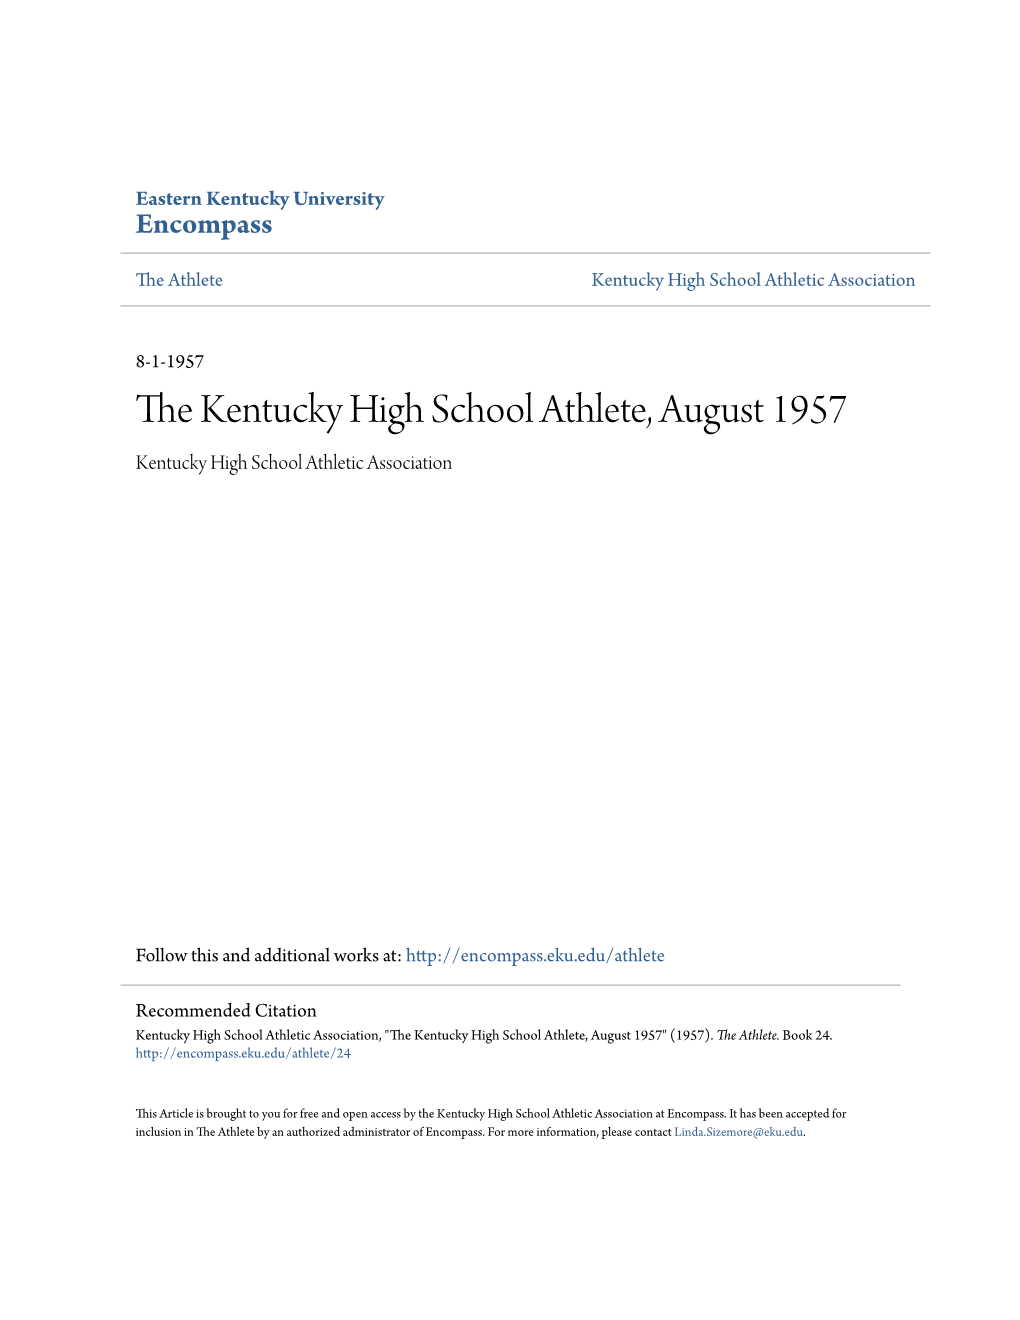 The Kentucky High School Athlete, August 1957 Kentucky High School Athletic Association